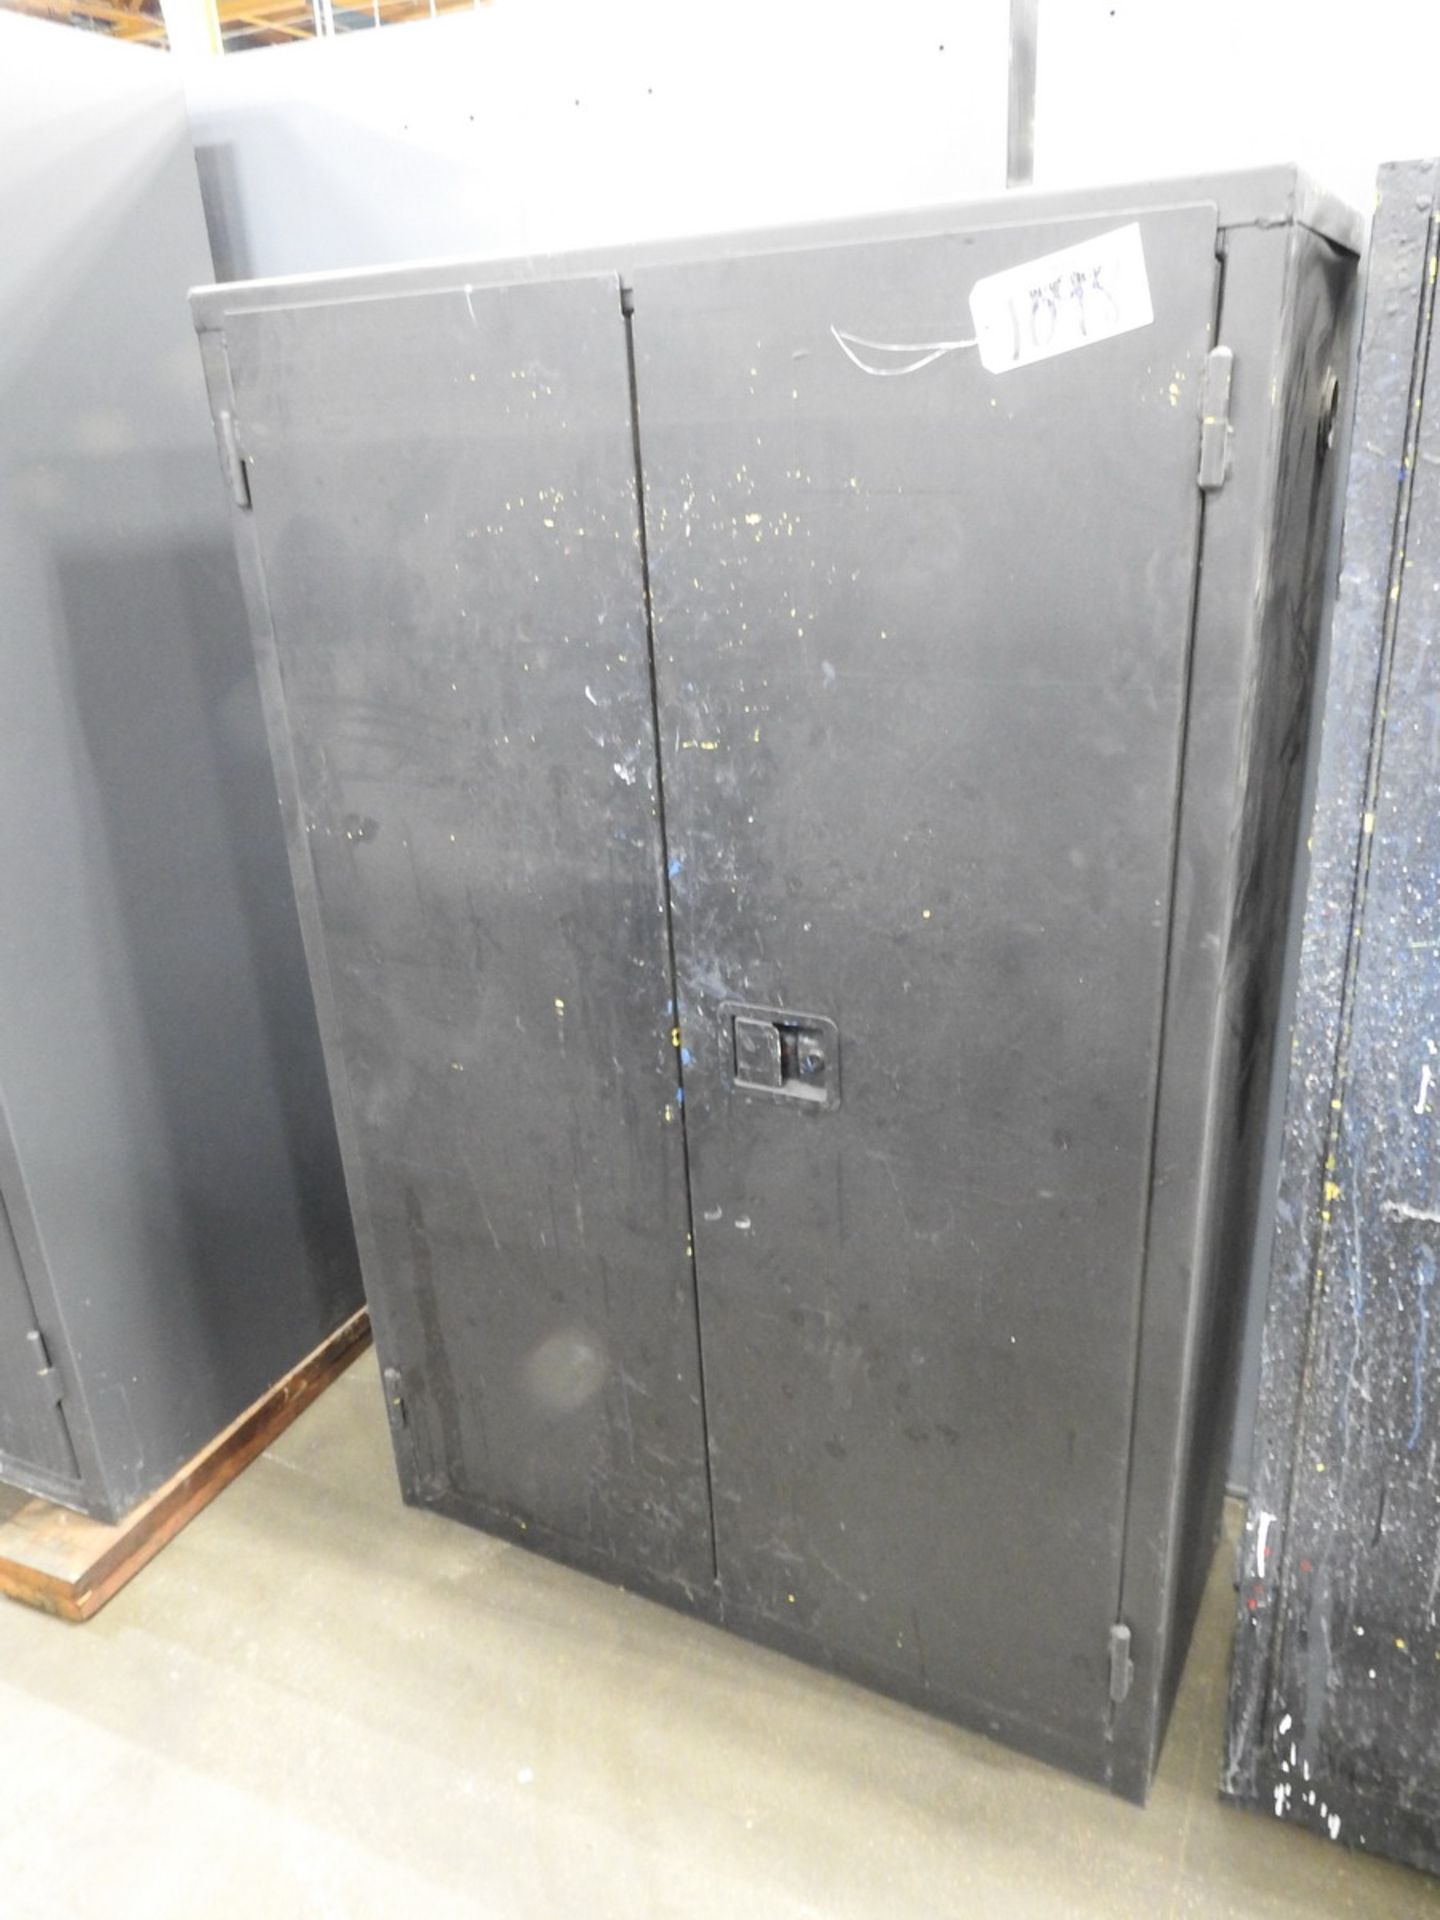 2-Door Safety Cabinet